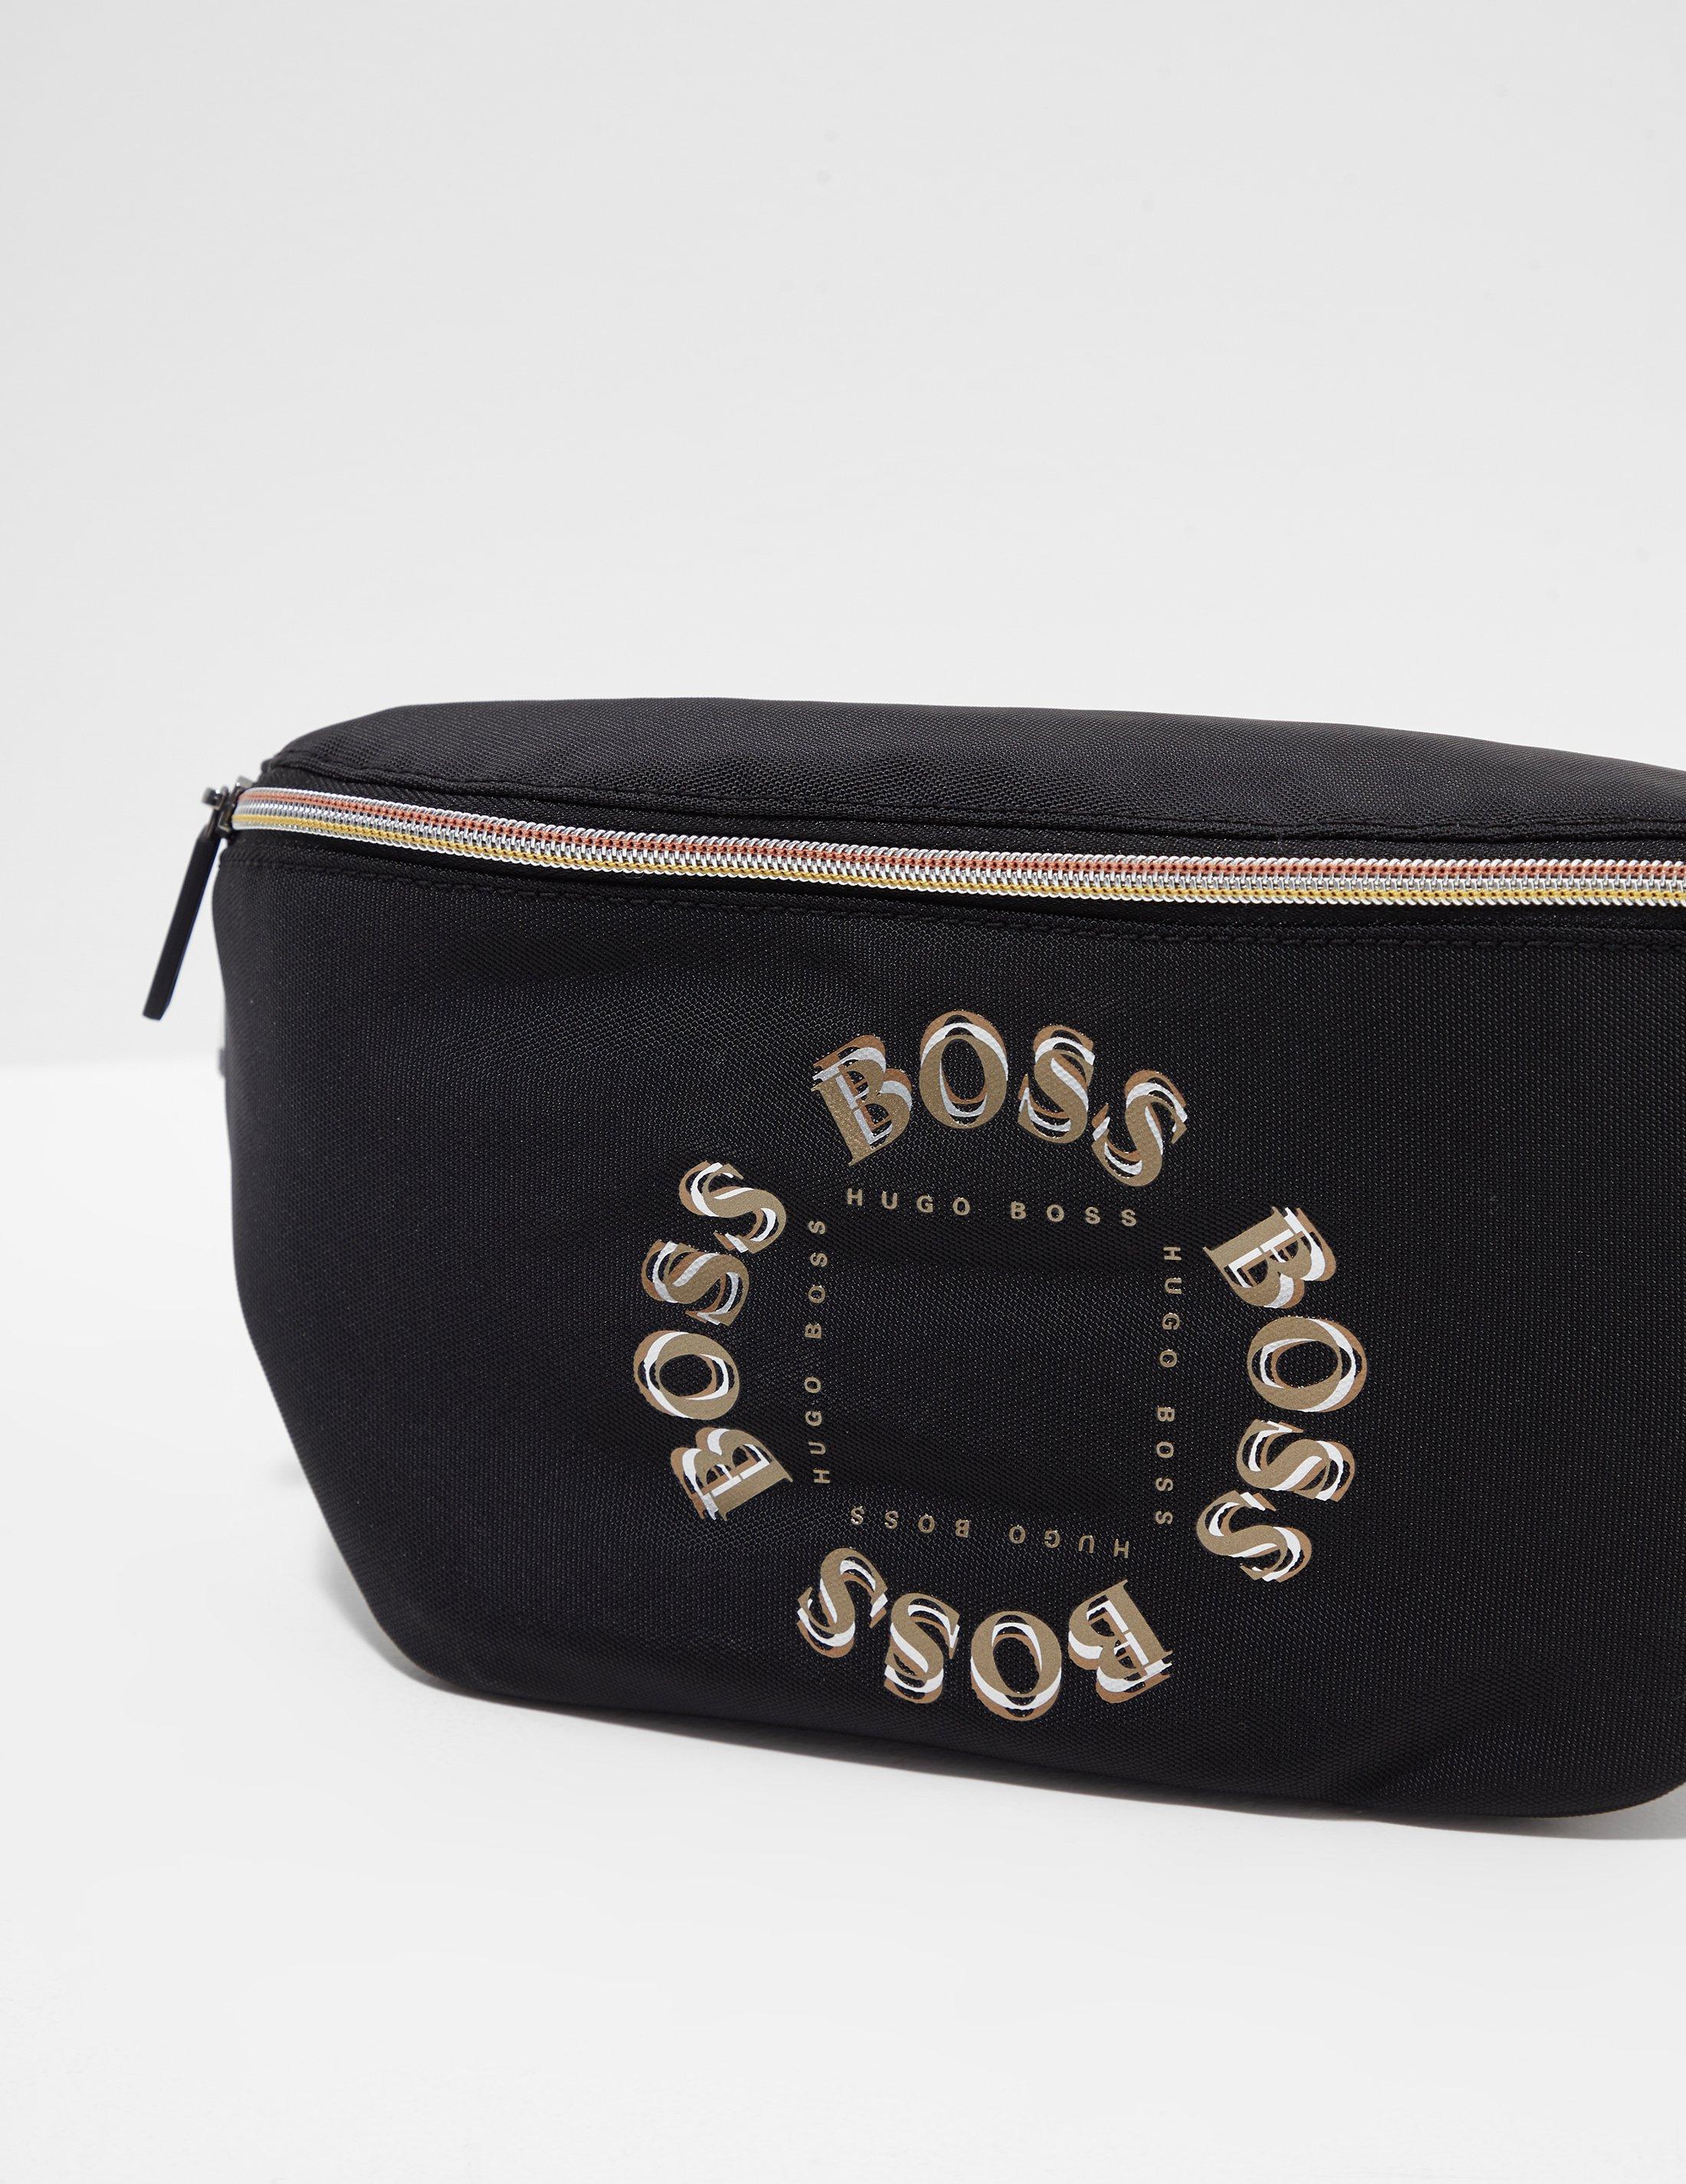 BOSS by HUGO BOSS Circle Logo Bum Bag Black for Men - Lyst